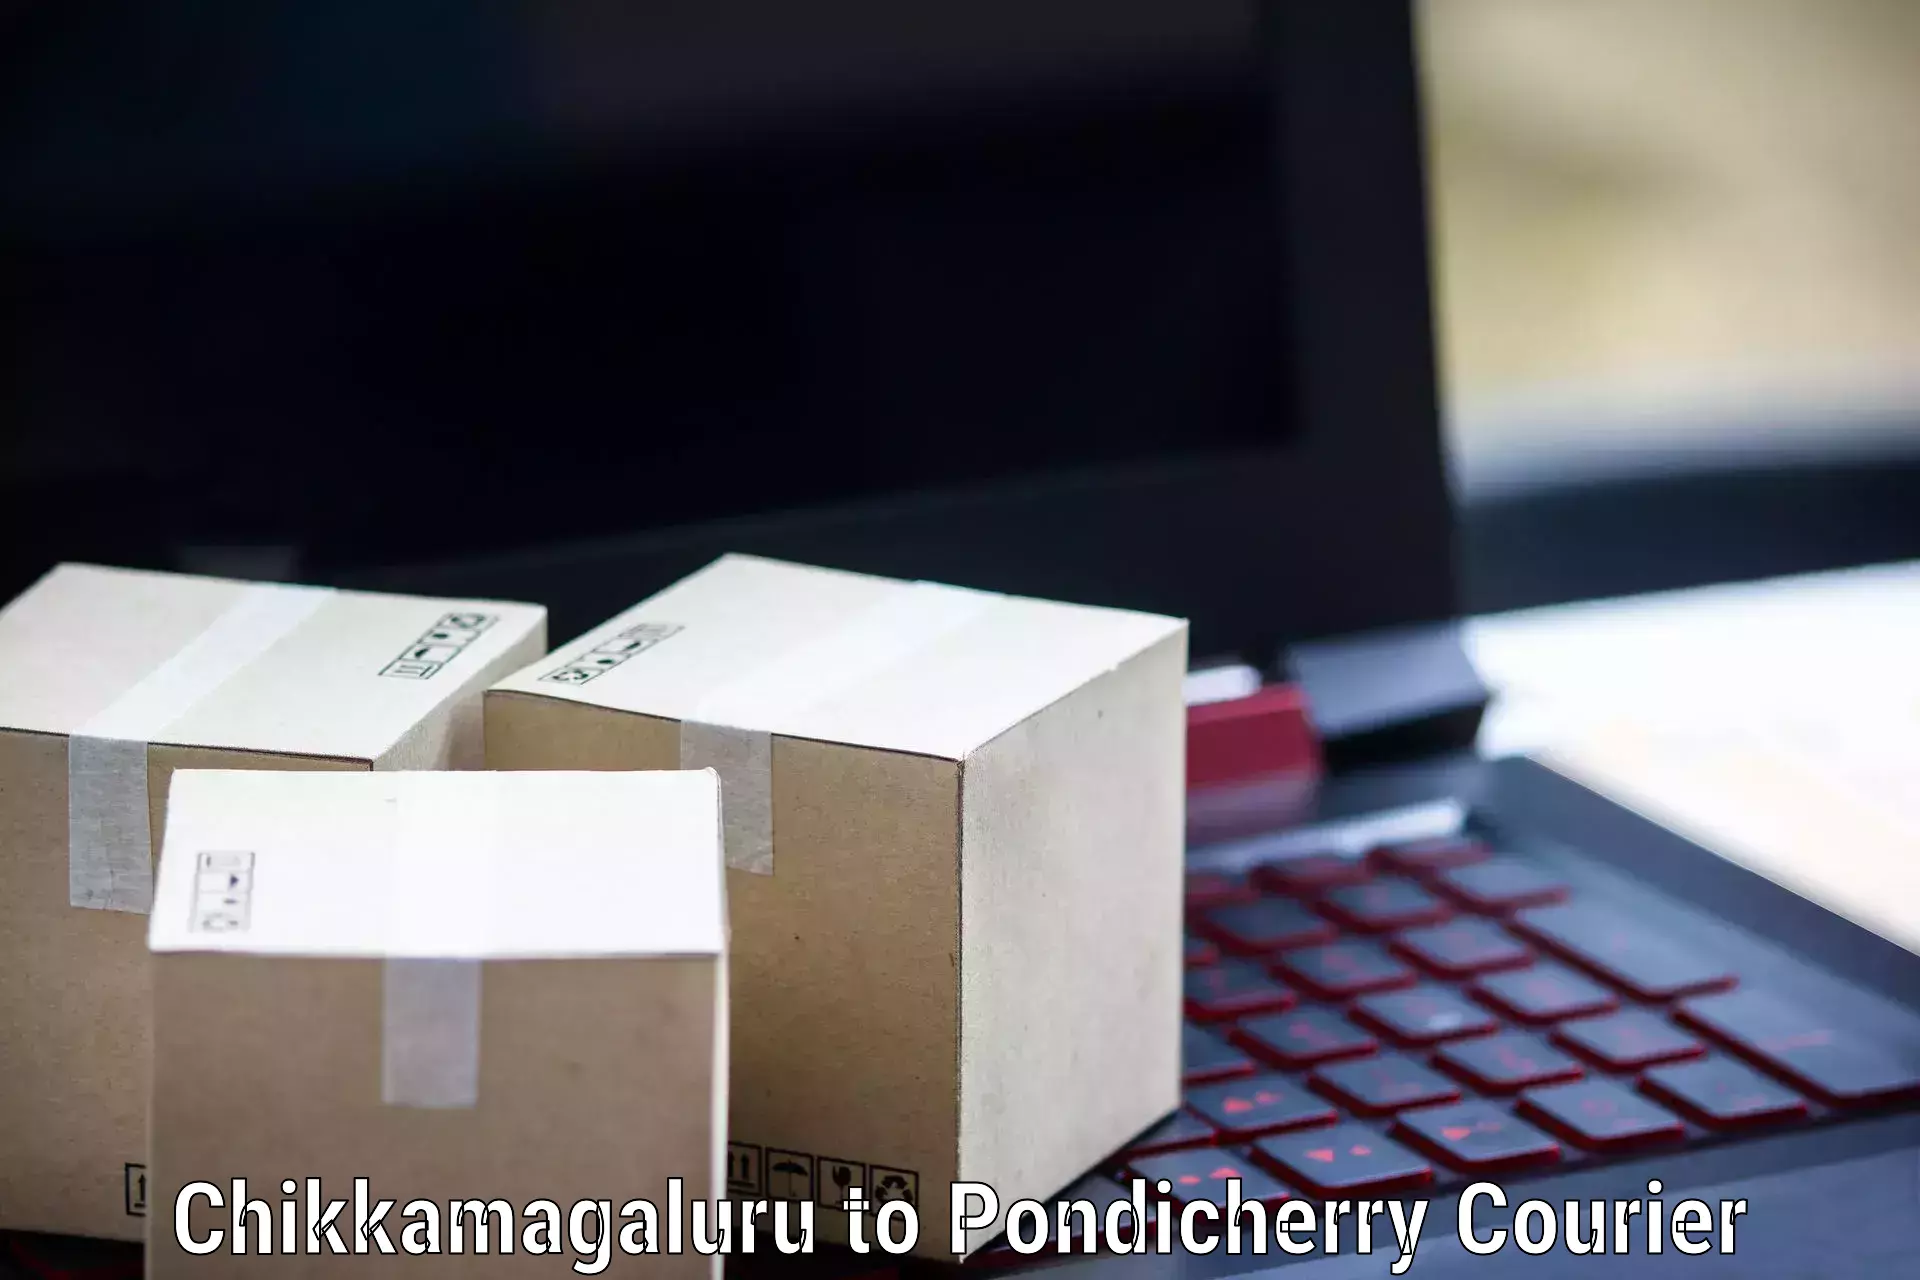 Global logistics network Chikkamagaluru to Pondicherry